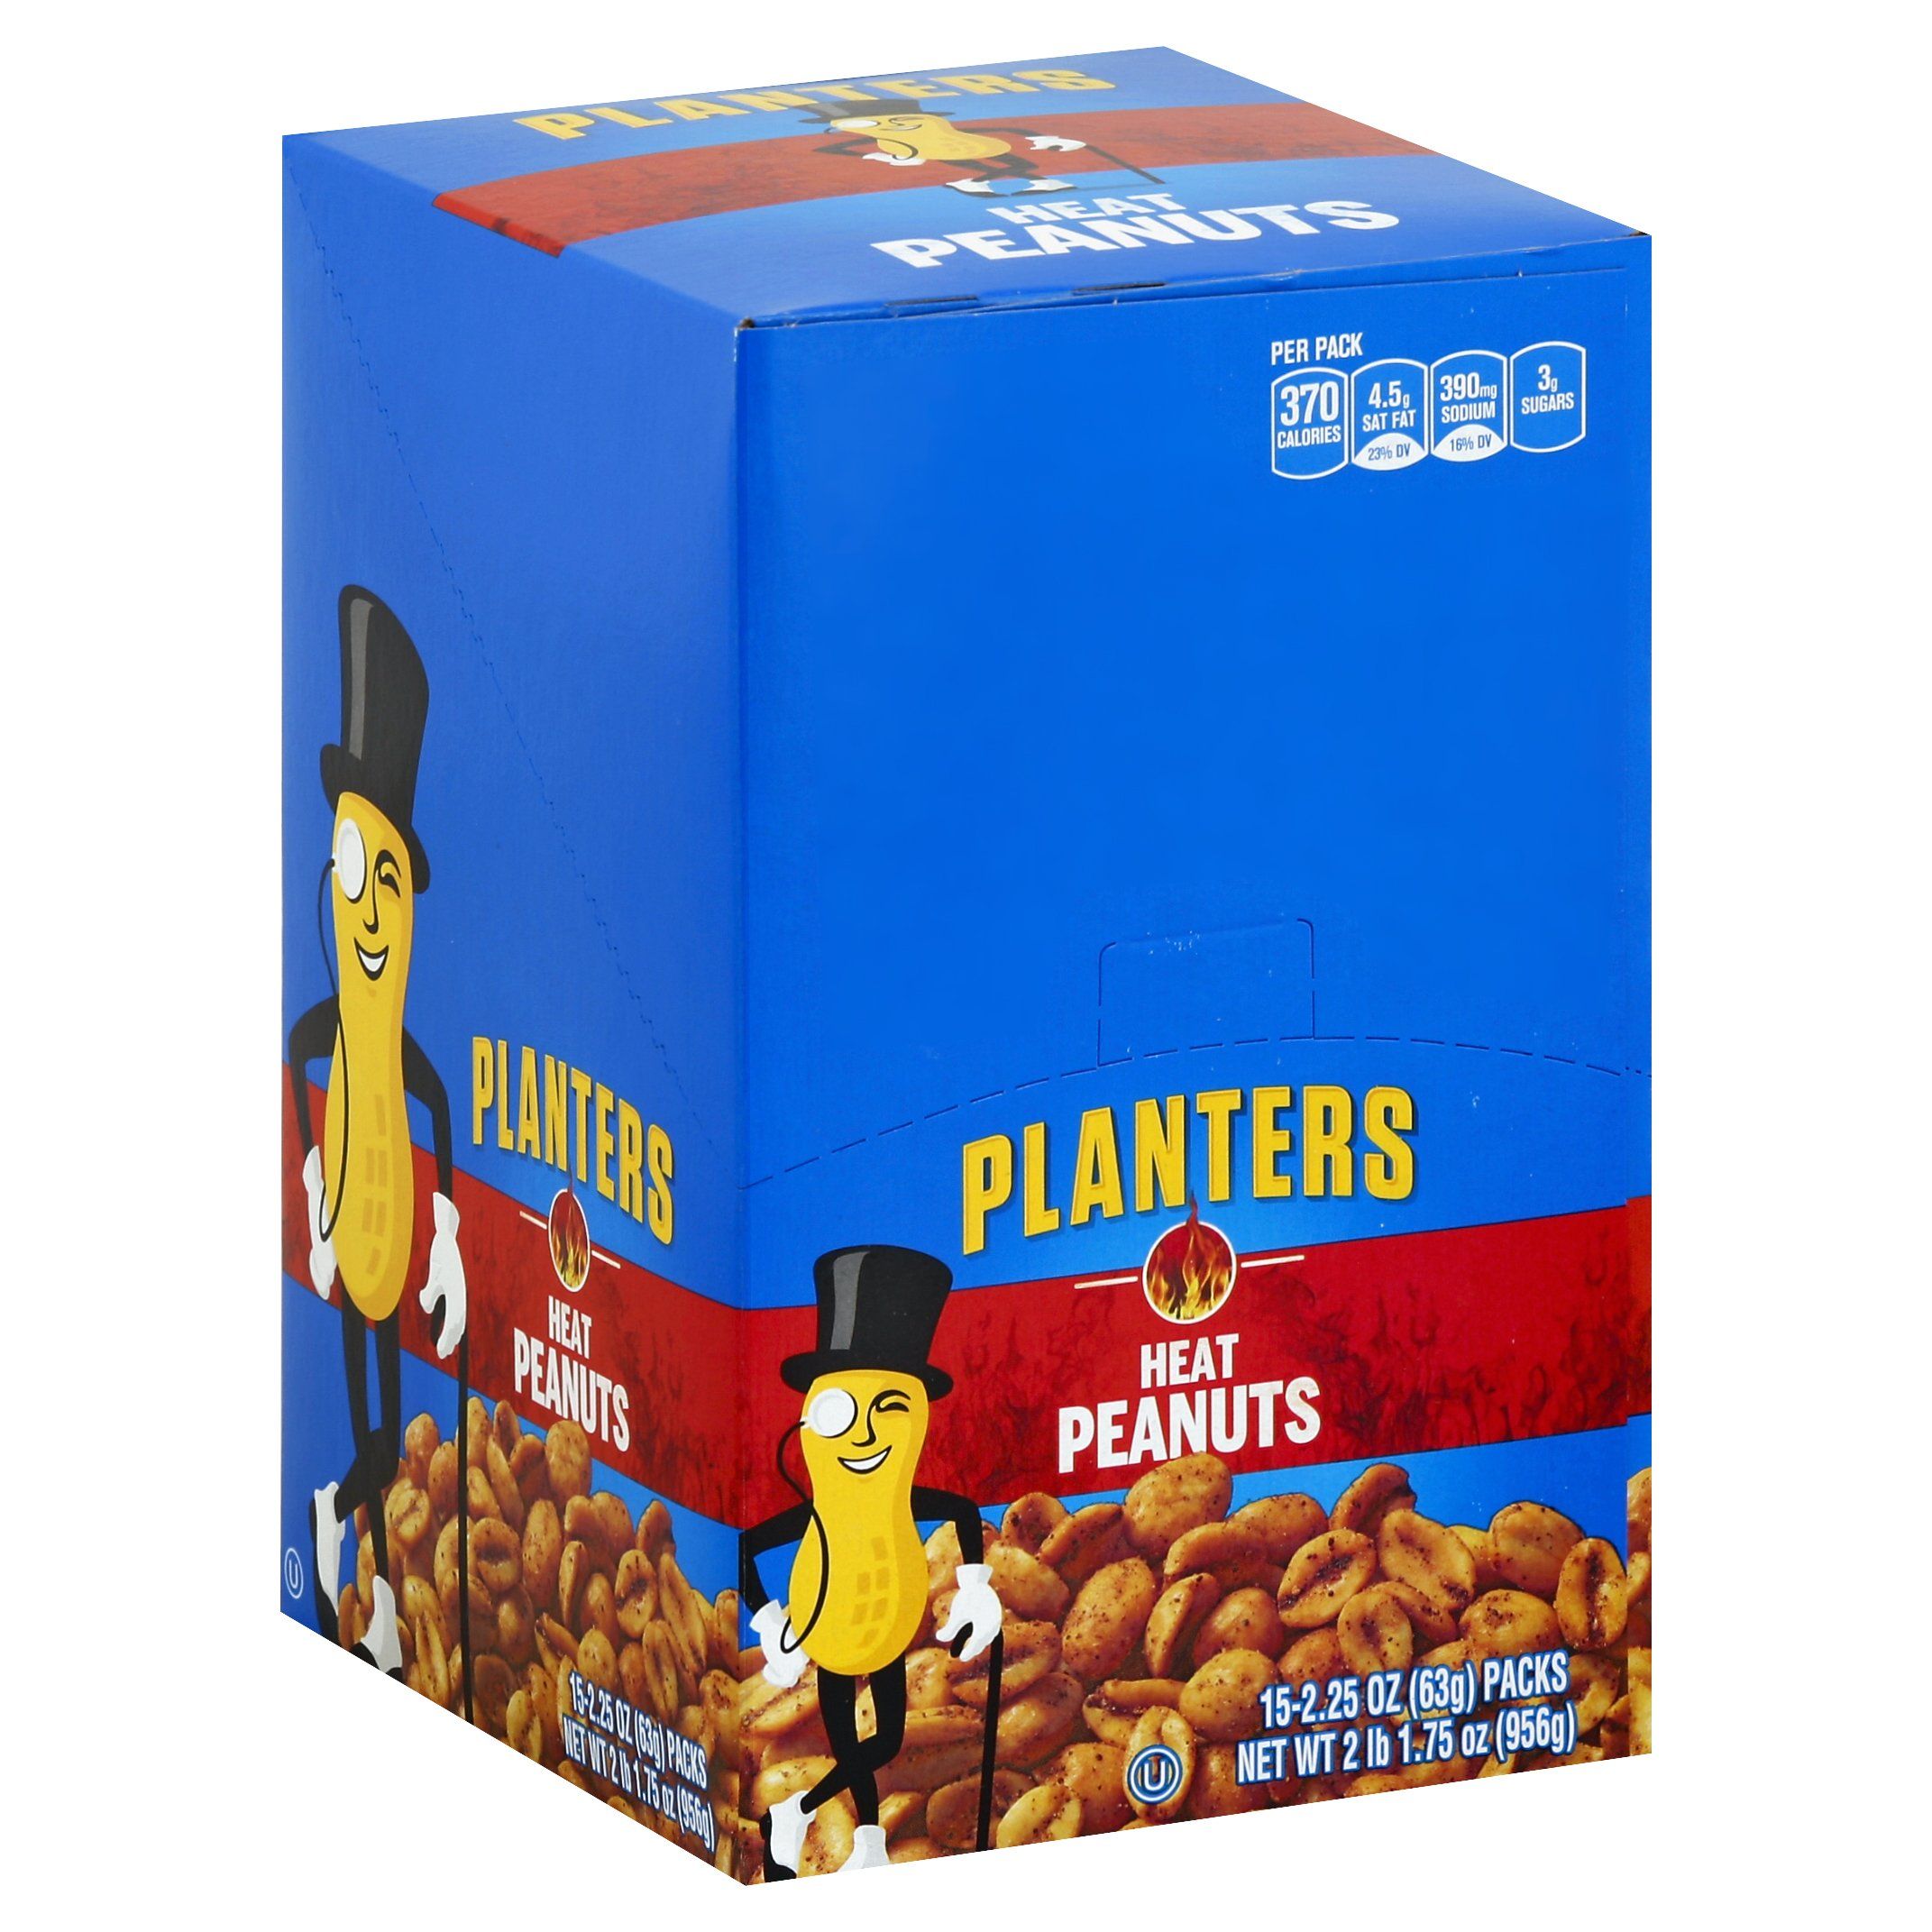 Planters Peanuts Planters Heat 2.25 Oz-15 Count 